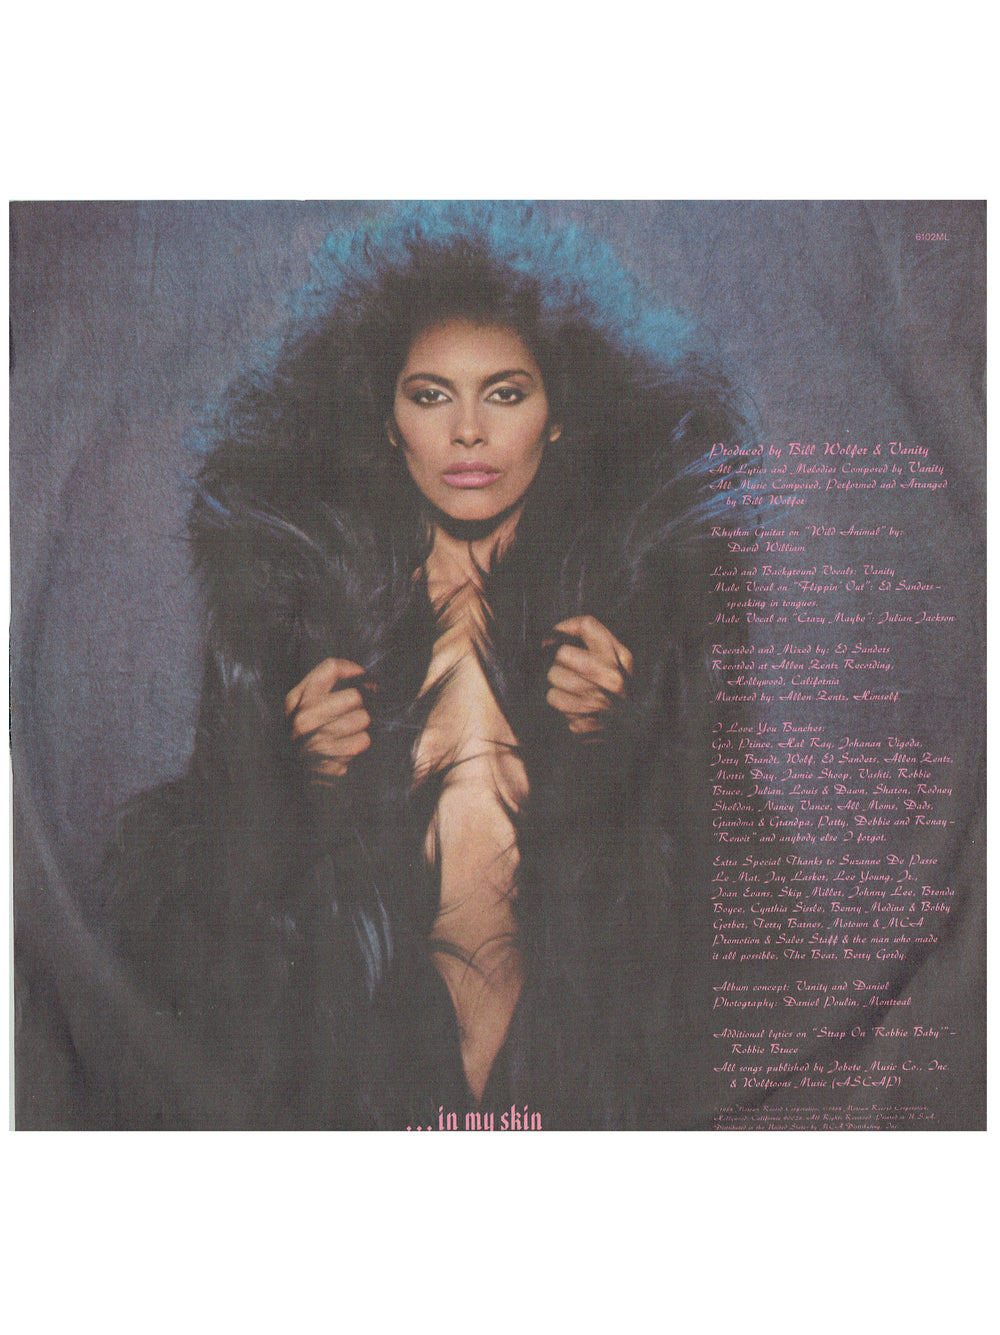 Vanity Wild Animal Vinyl Album 7 Tracks USA Release 1984 Motown Prince GOLD STAMP